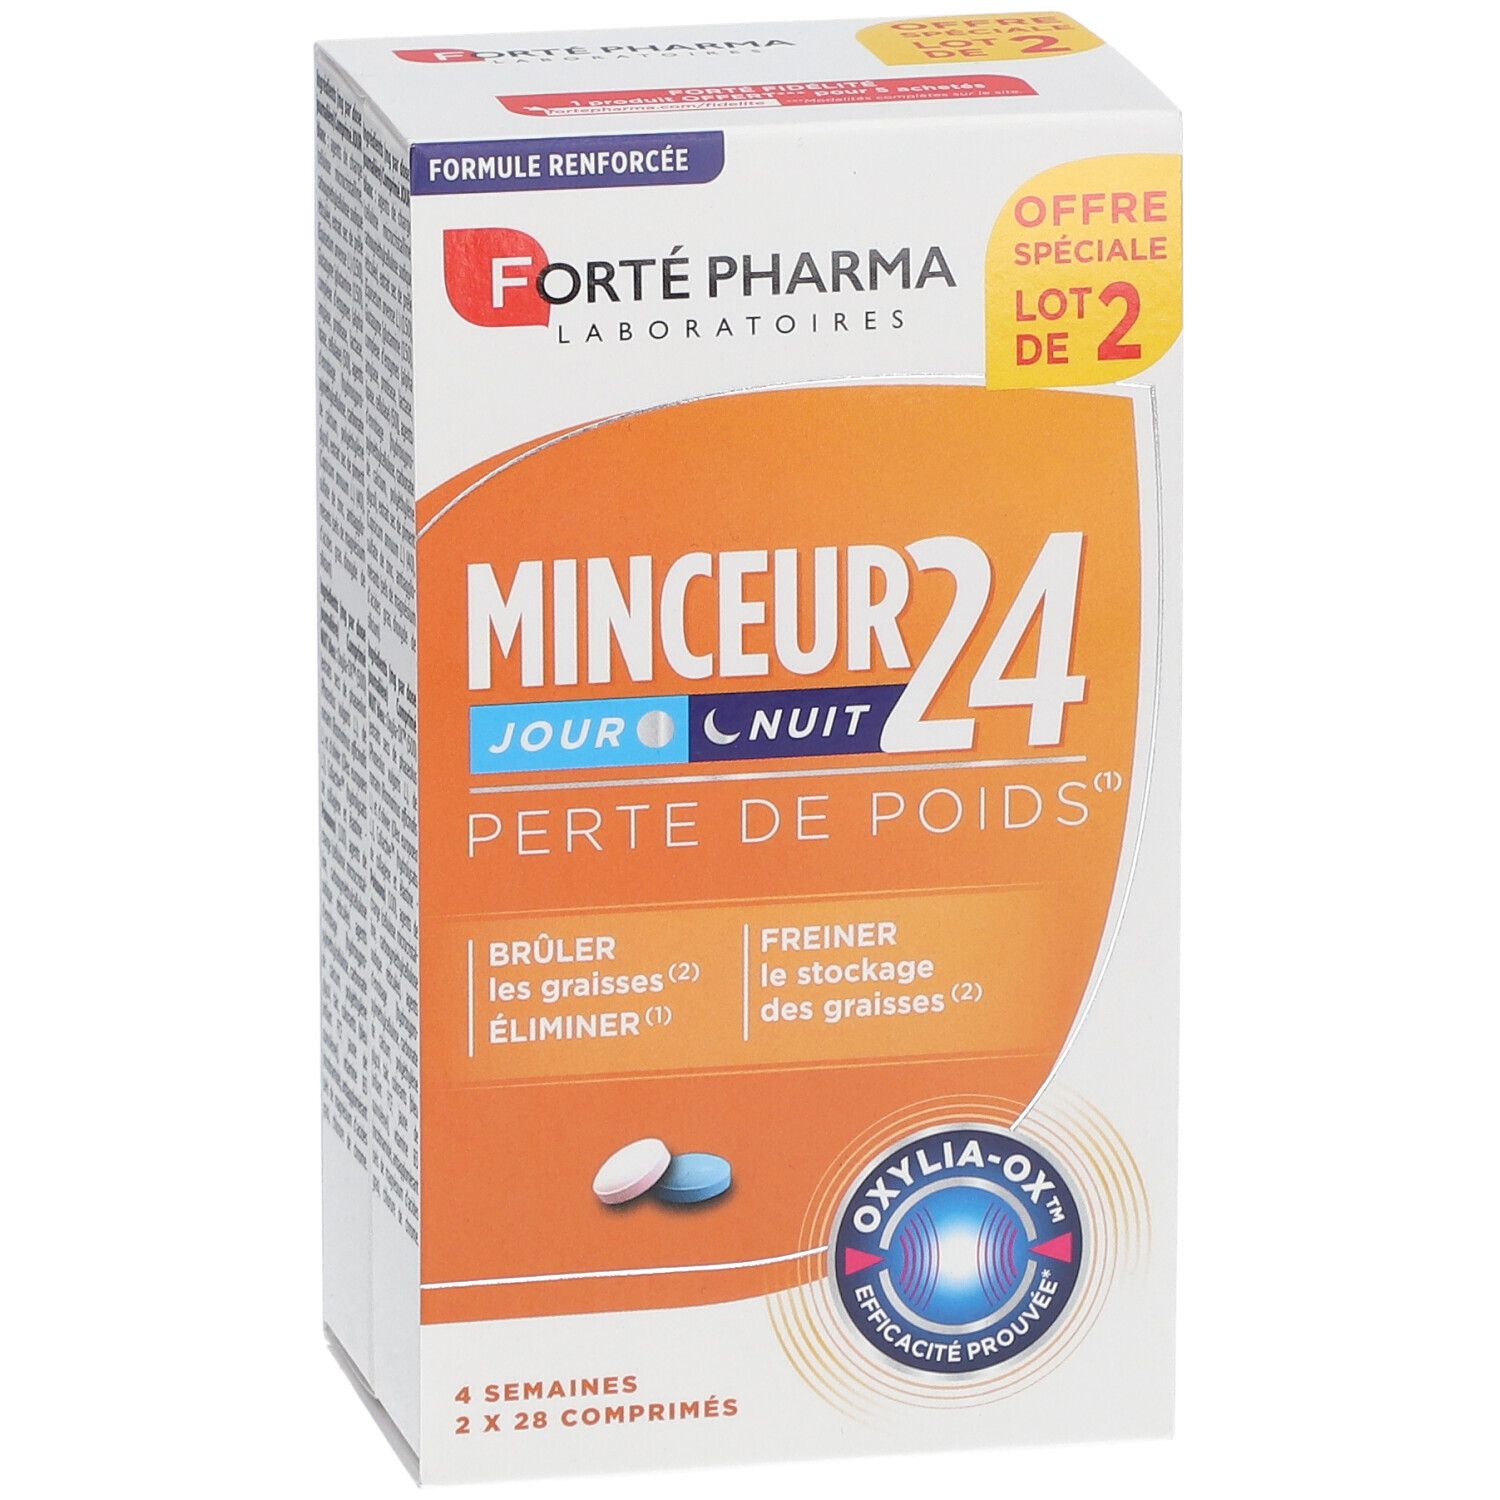 Forté Pharma Minceur 24 Jour & Nuit